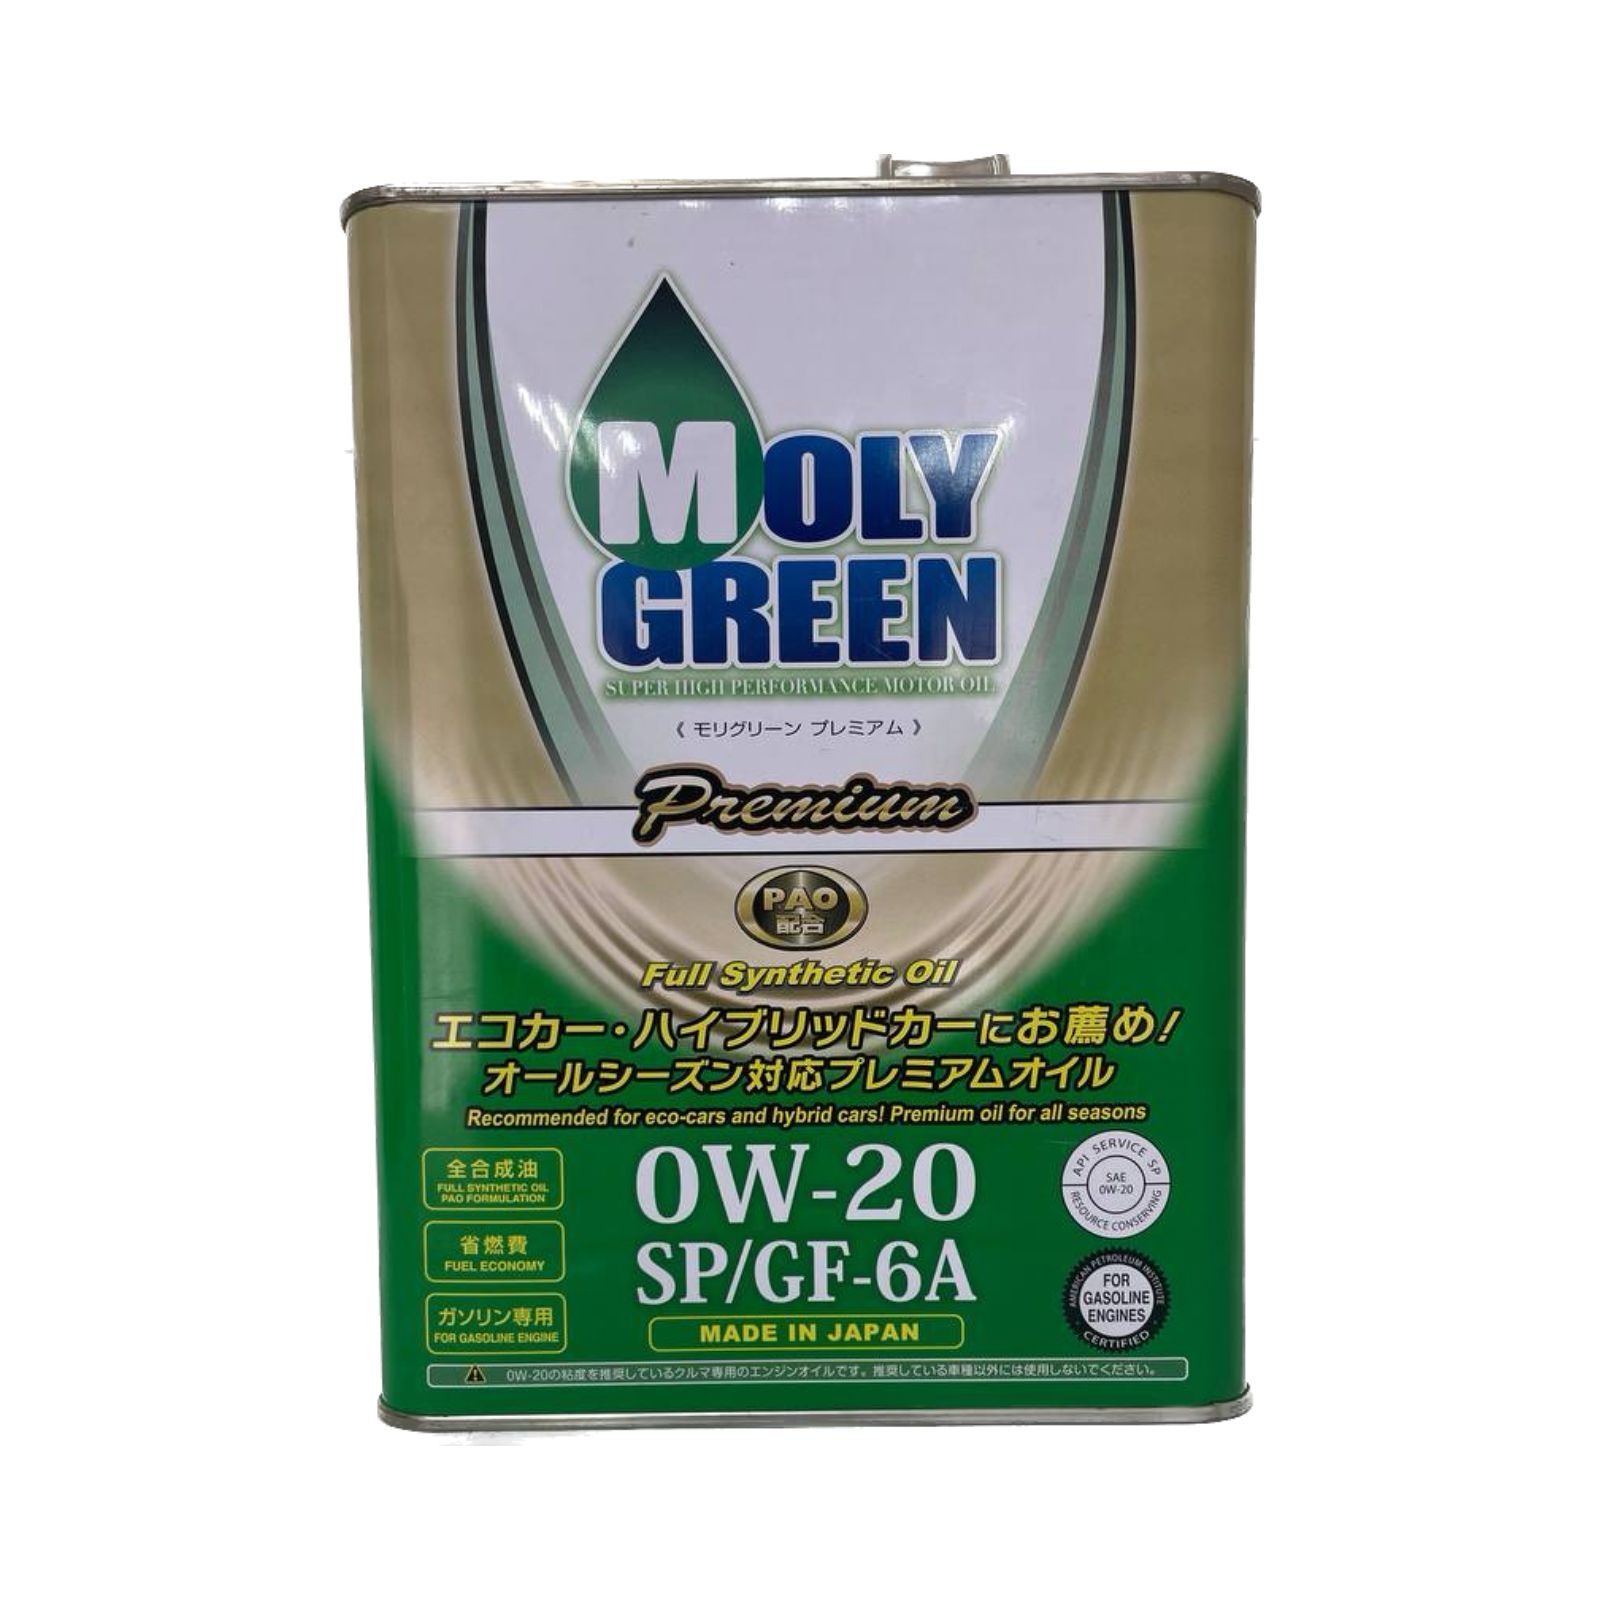 Moly Green 0w20 Premium. Moly Green 0w20 Hybrid. Moly Green 0470166масло трансмиссионное синтетическое "Premium CVT Fluid", 4л. Отзыв масло moly green